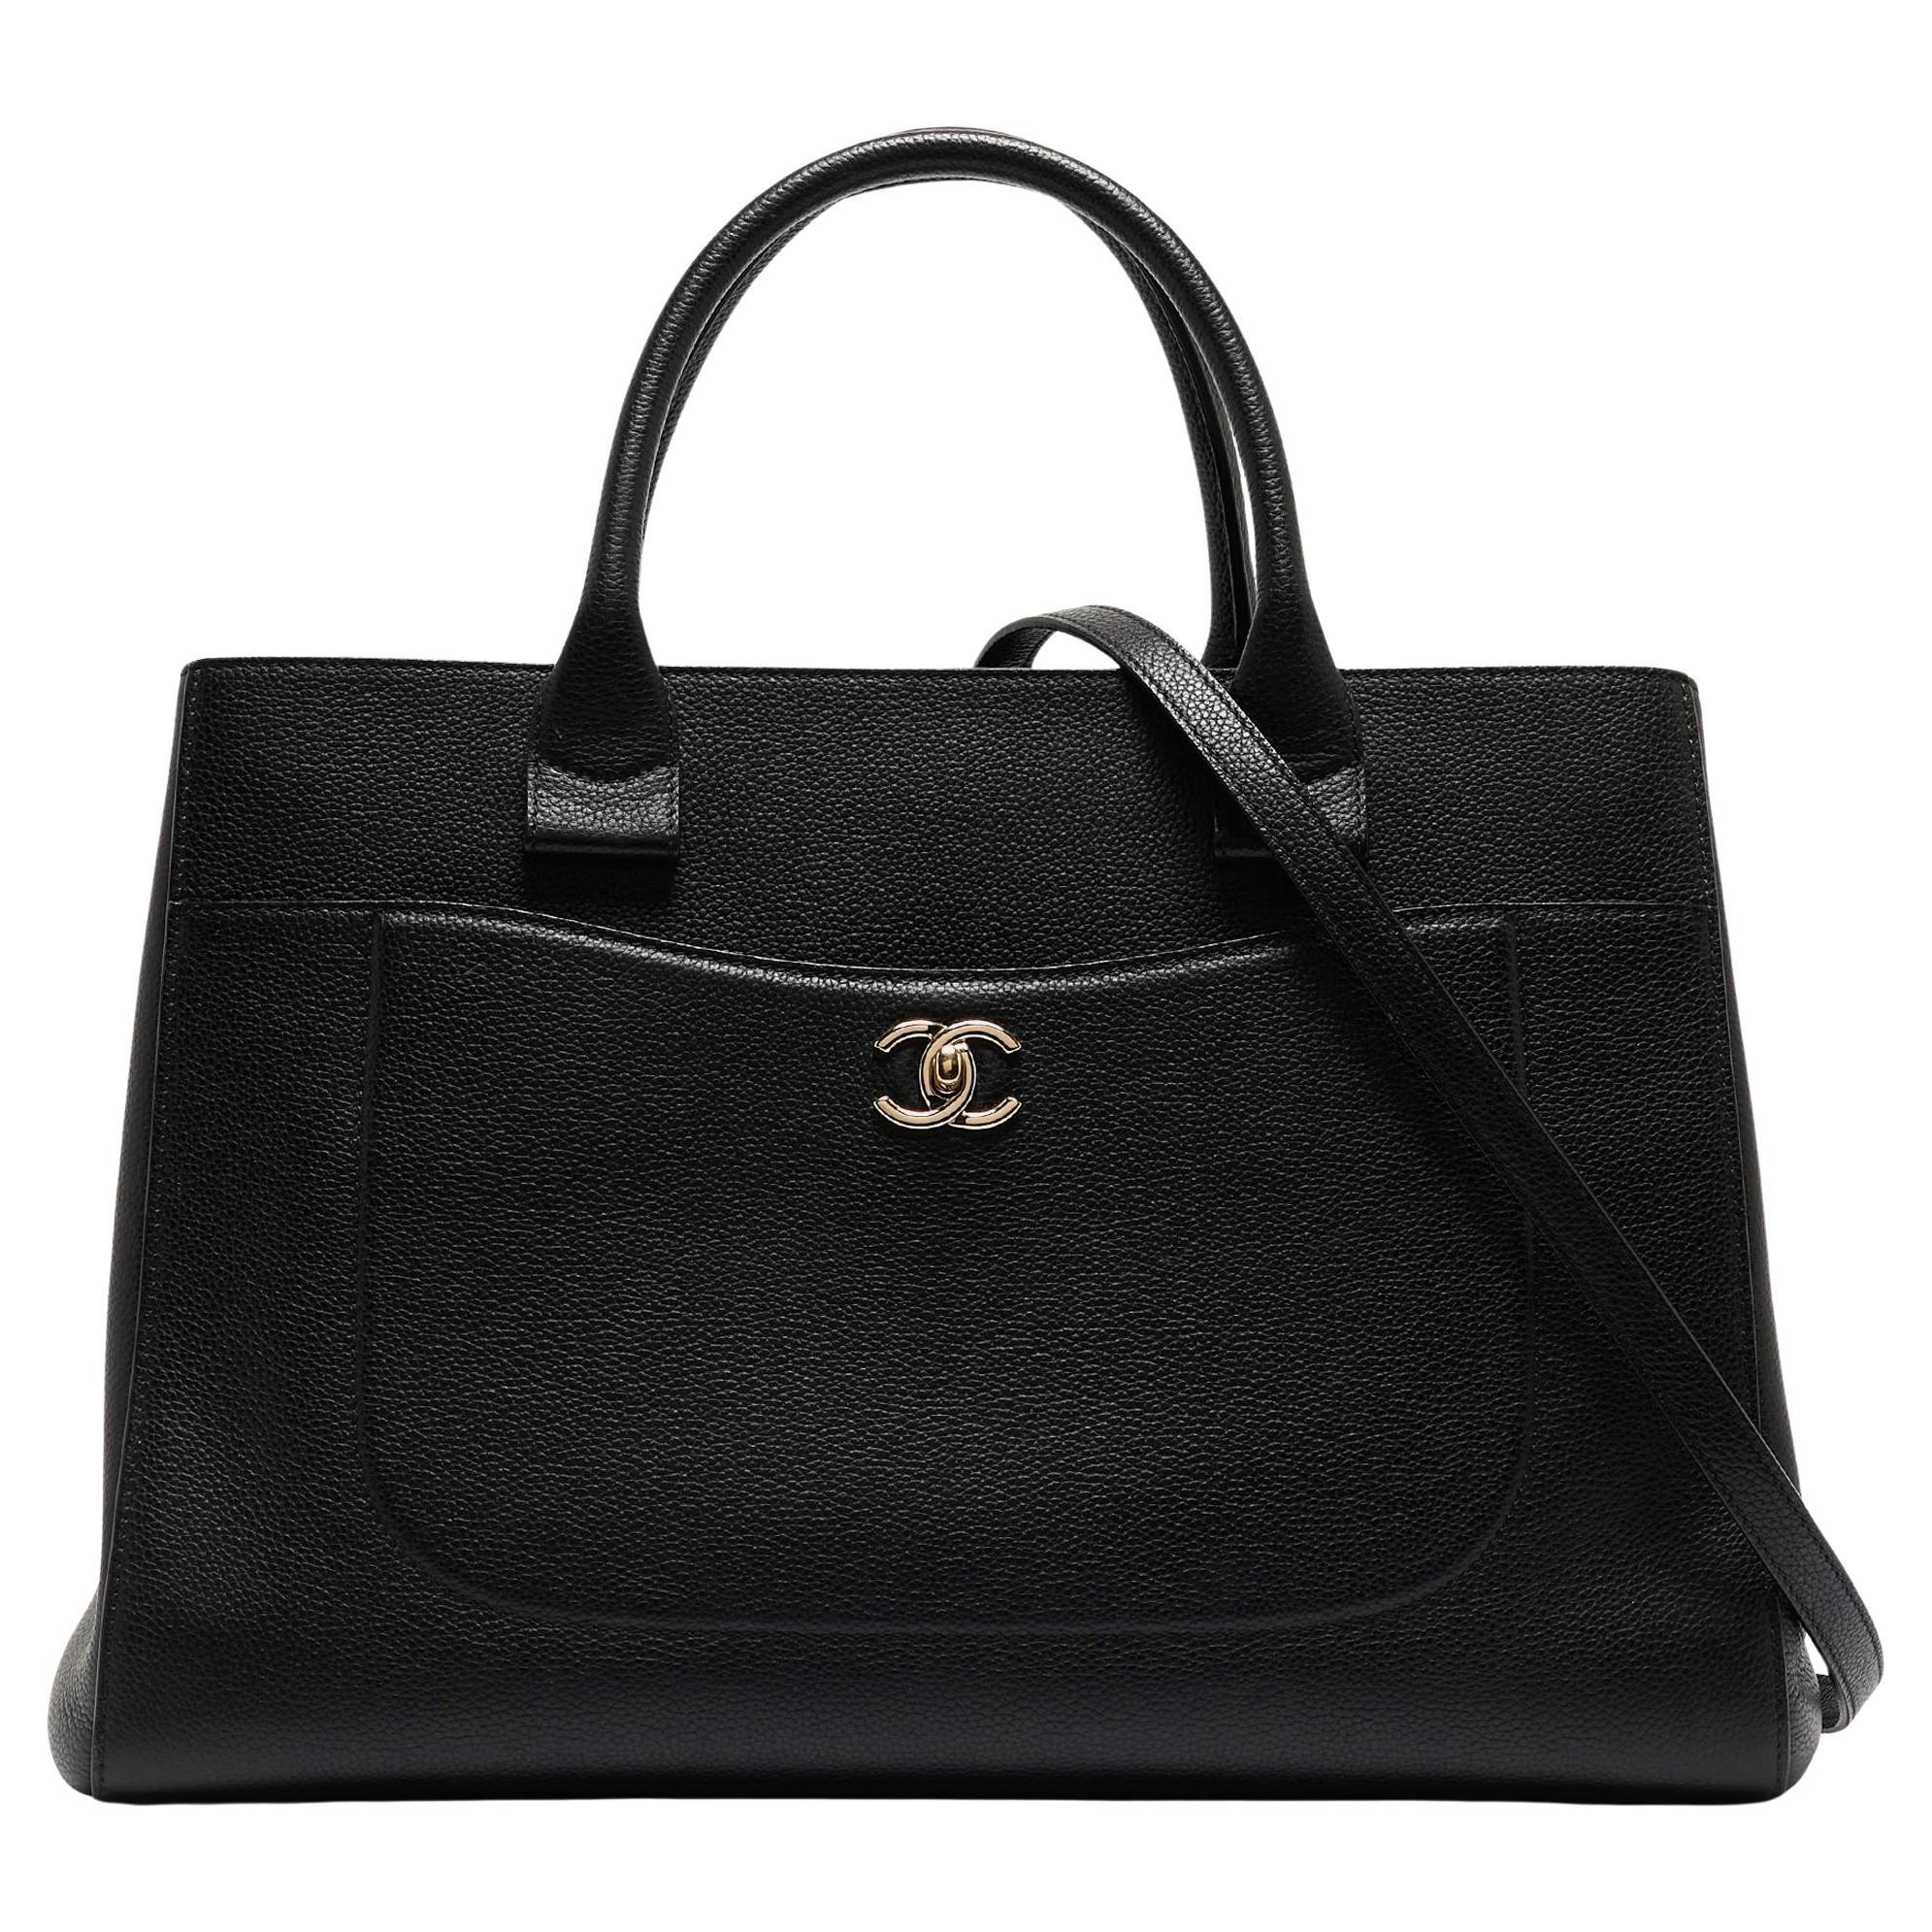 Chanel Black Leather Medium Neo Executive Shopping Tote